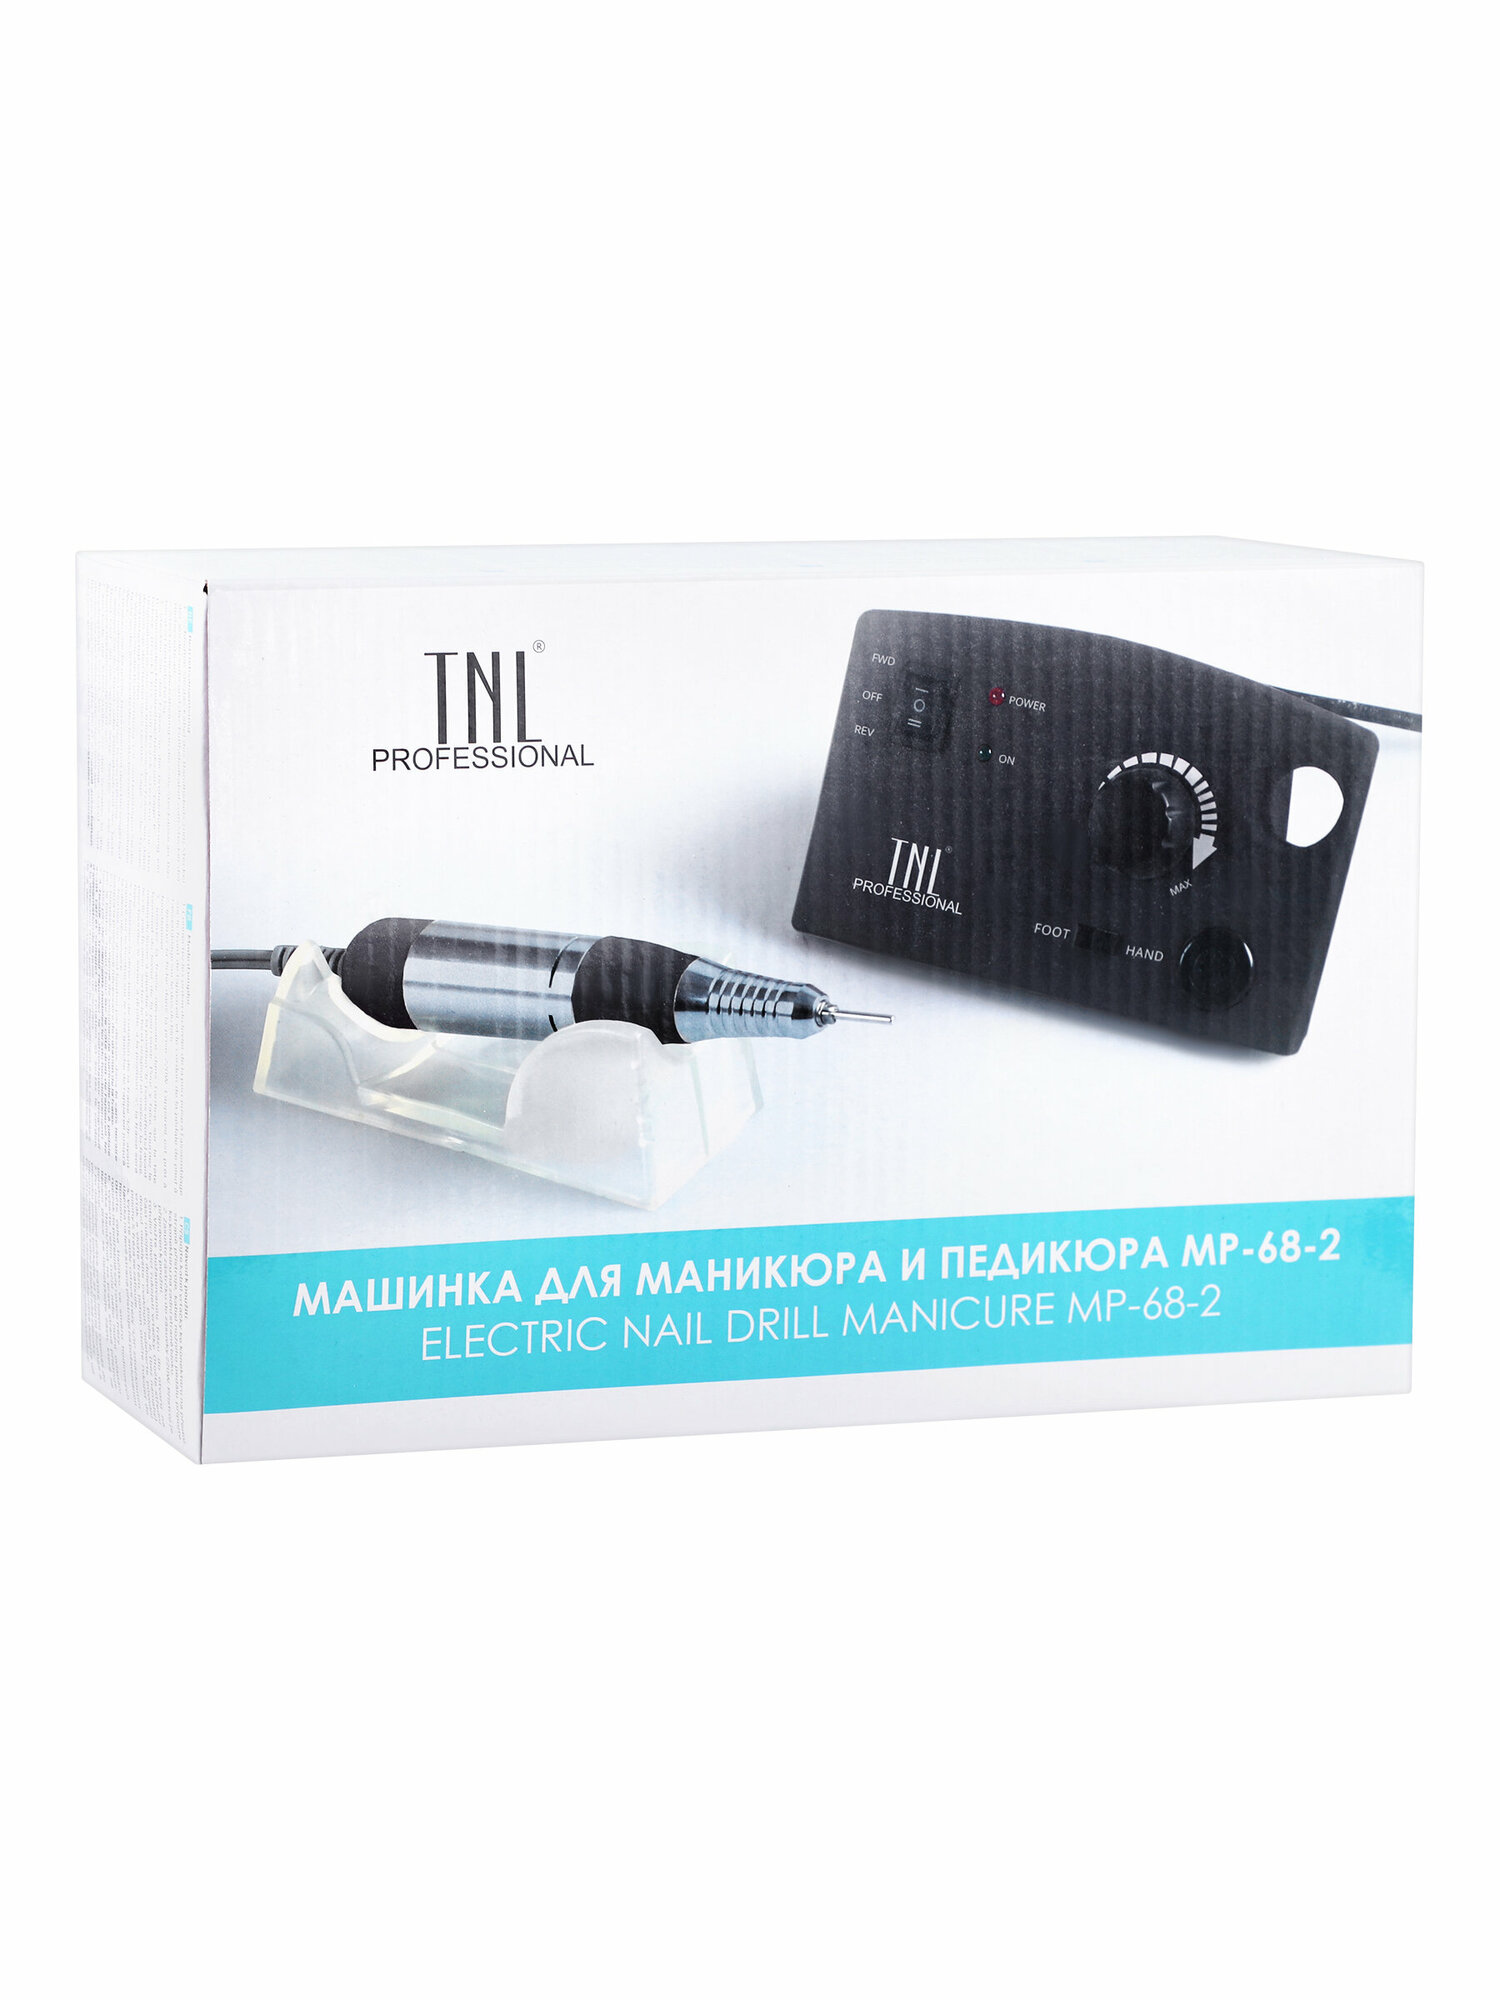 TNL, Аппарат для маникюра и педикюра MP-68-2